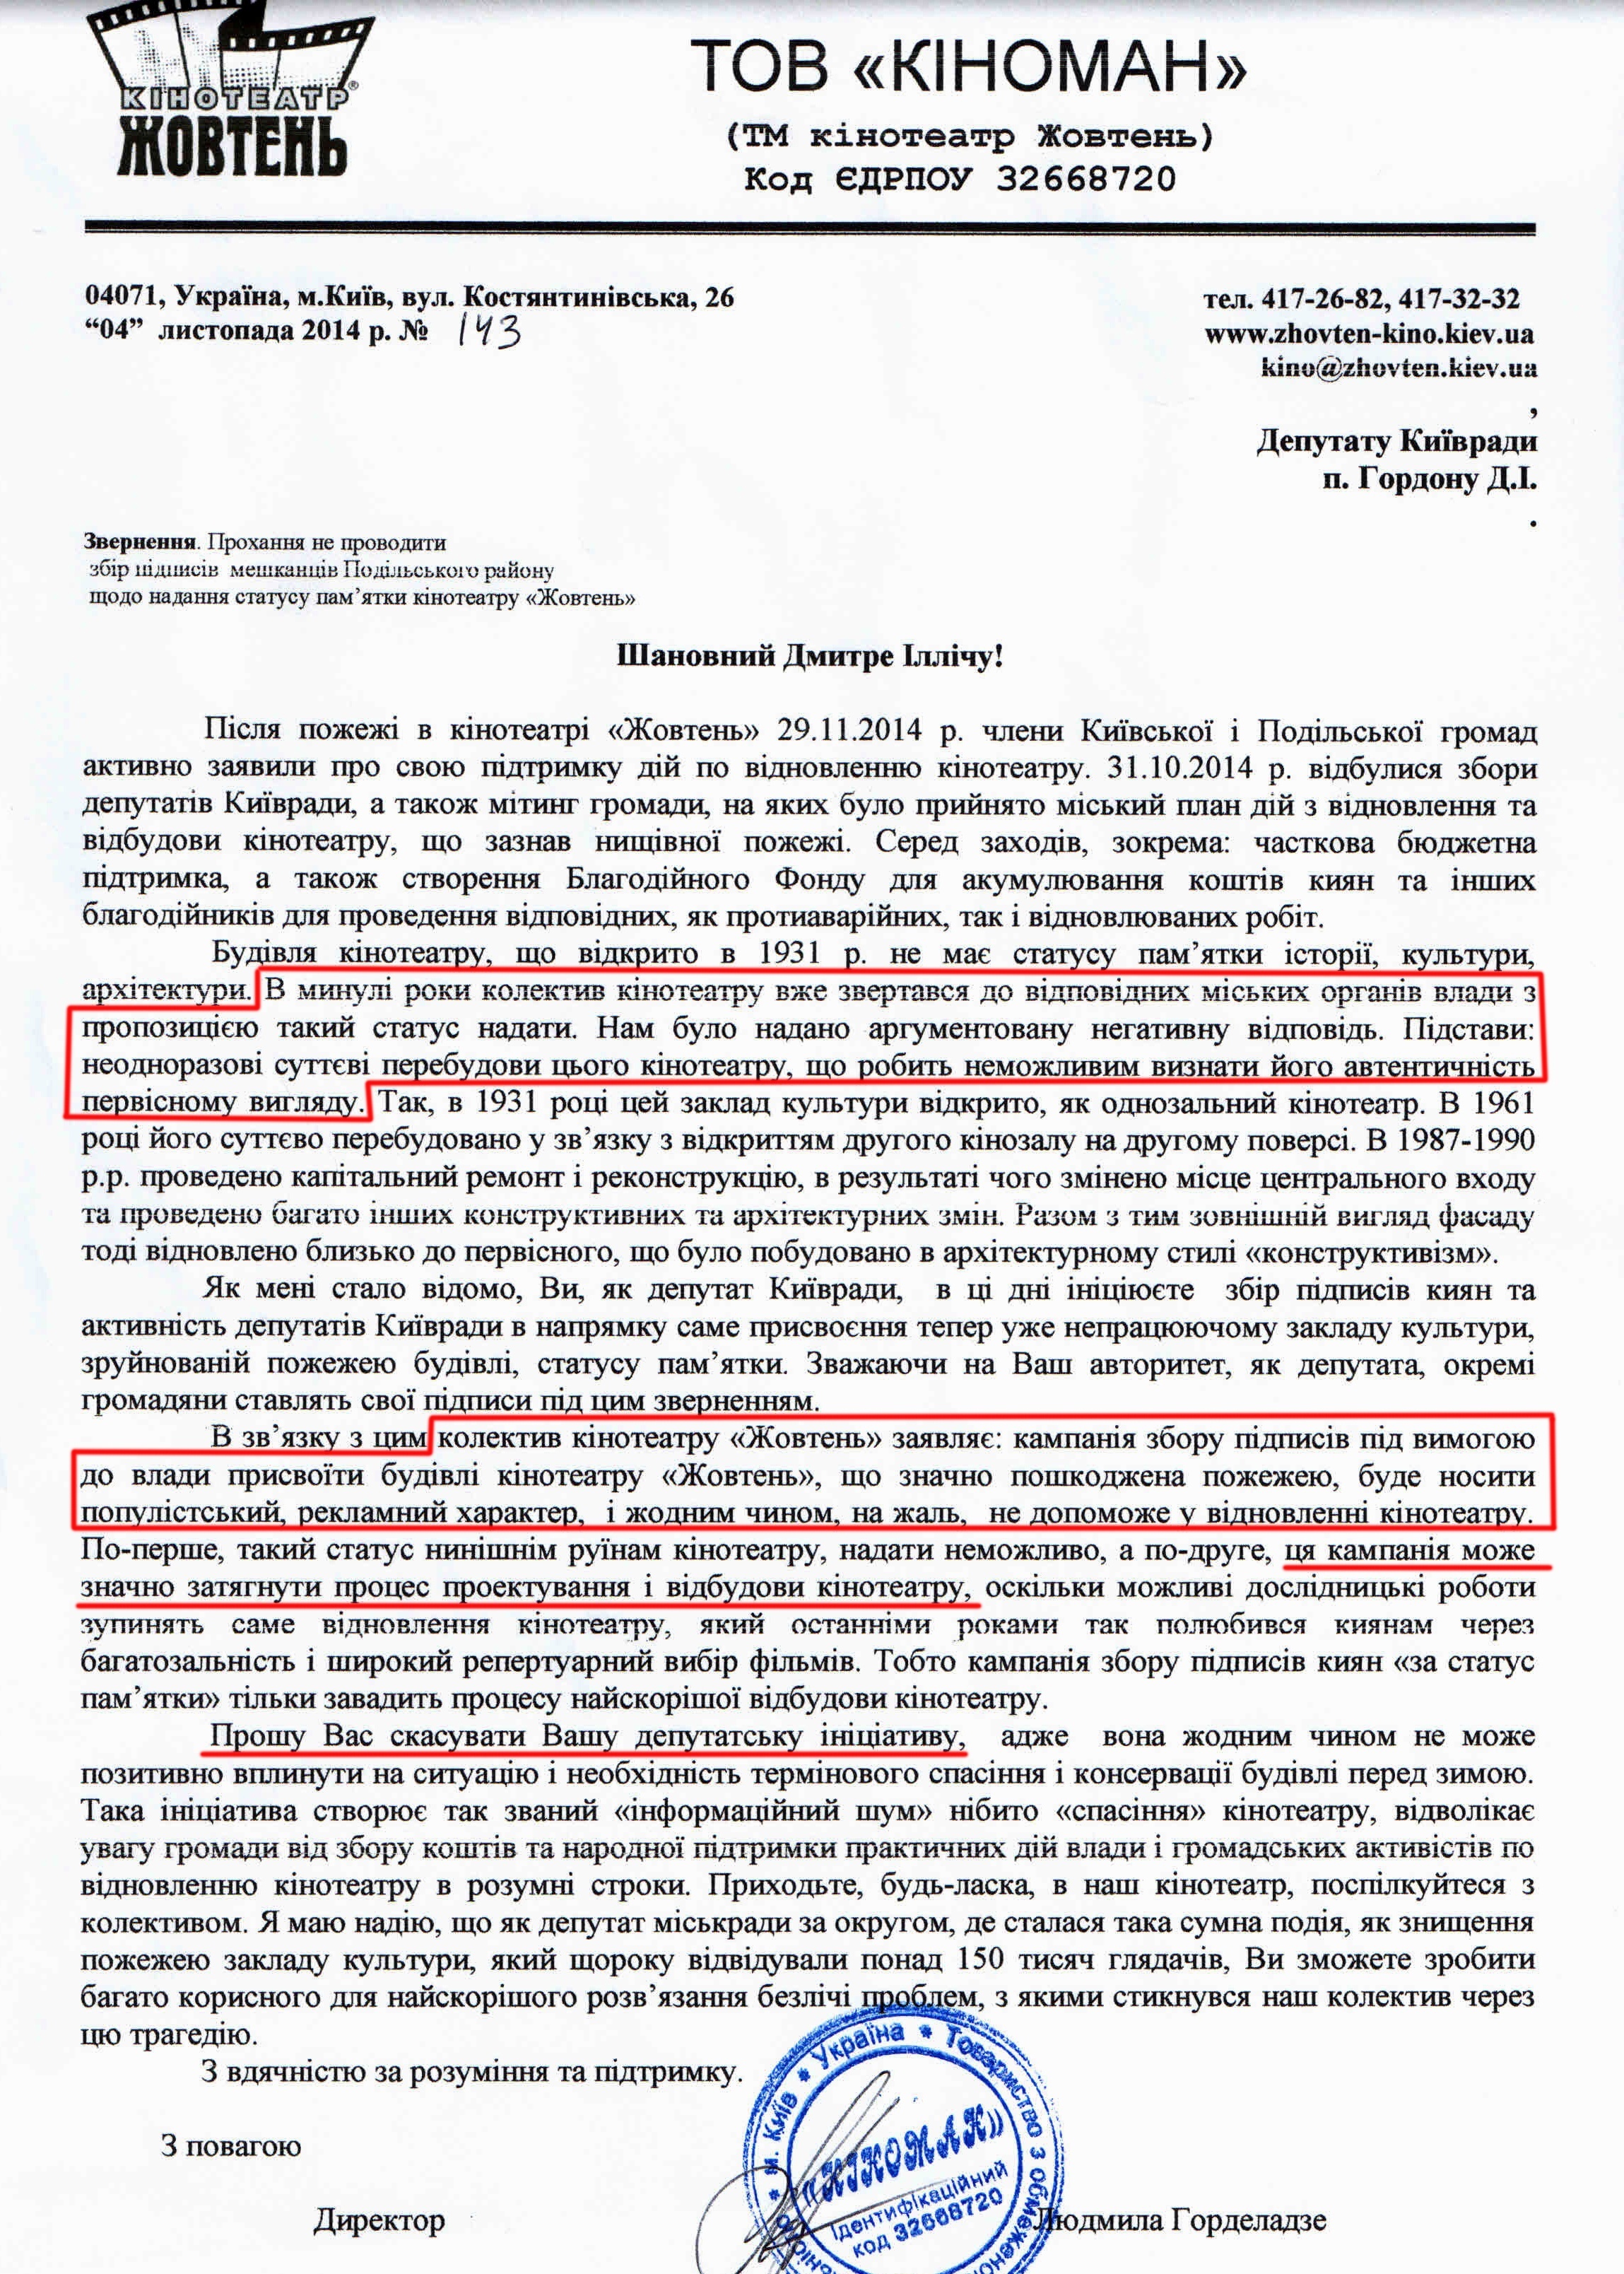 Scan of the letter from the director of Zhovten Liudmila Gordeladze to the deputy Dmitriy Gordon